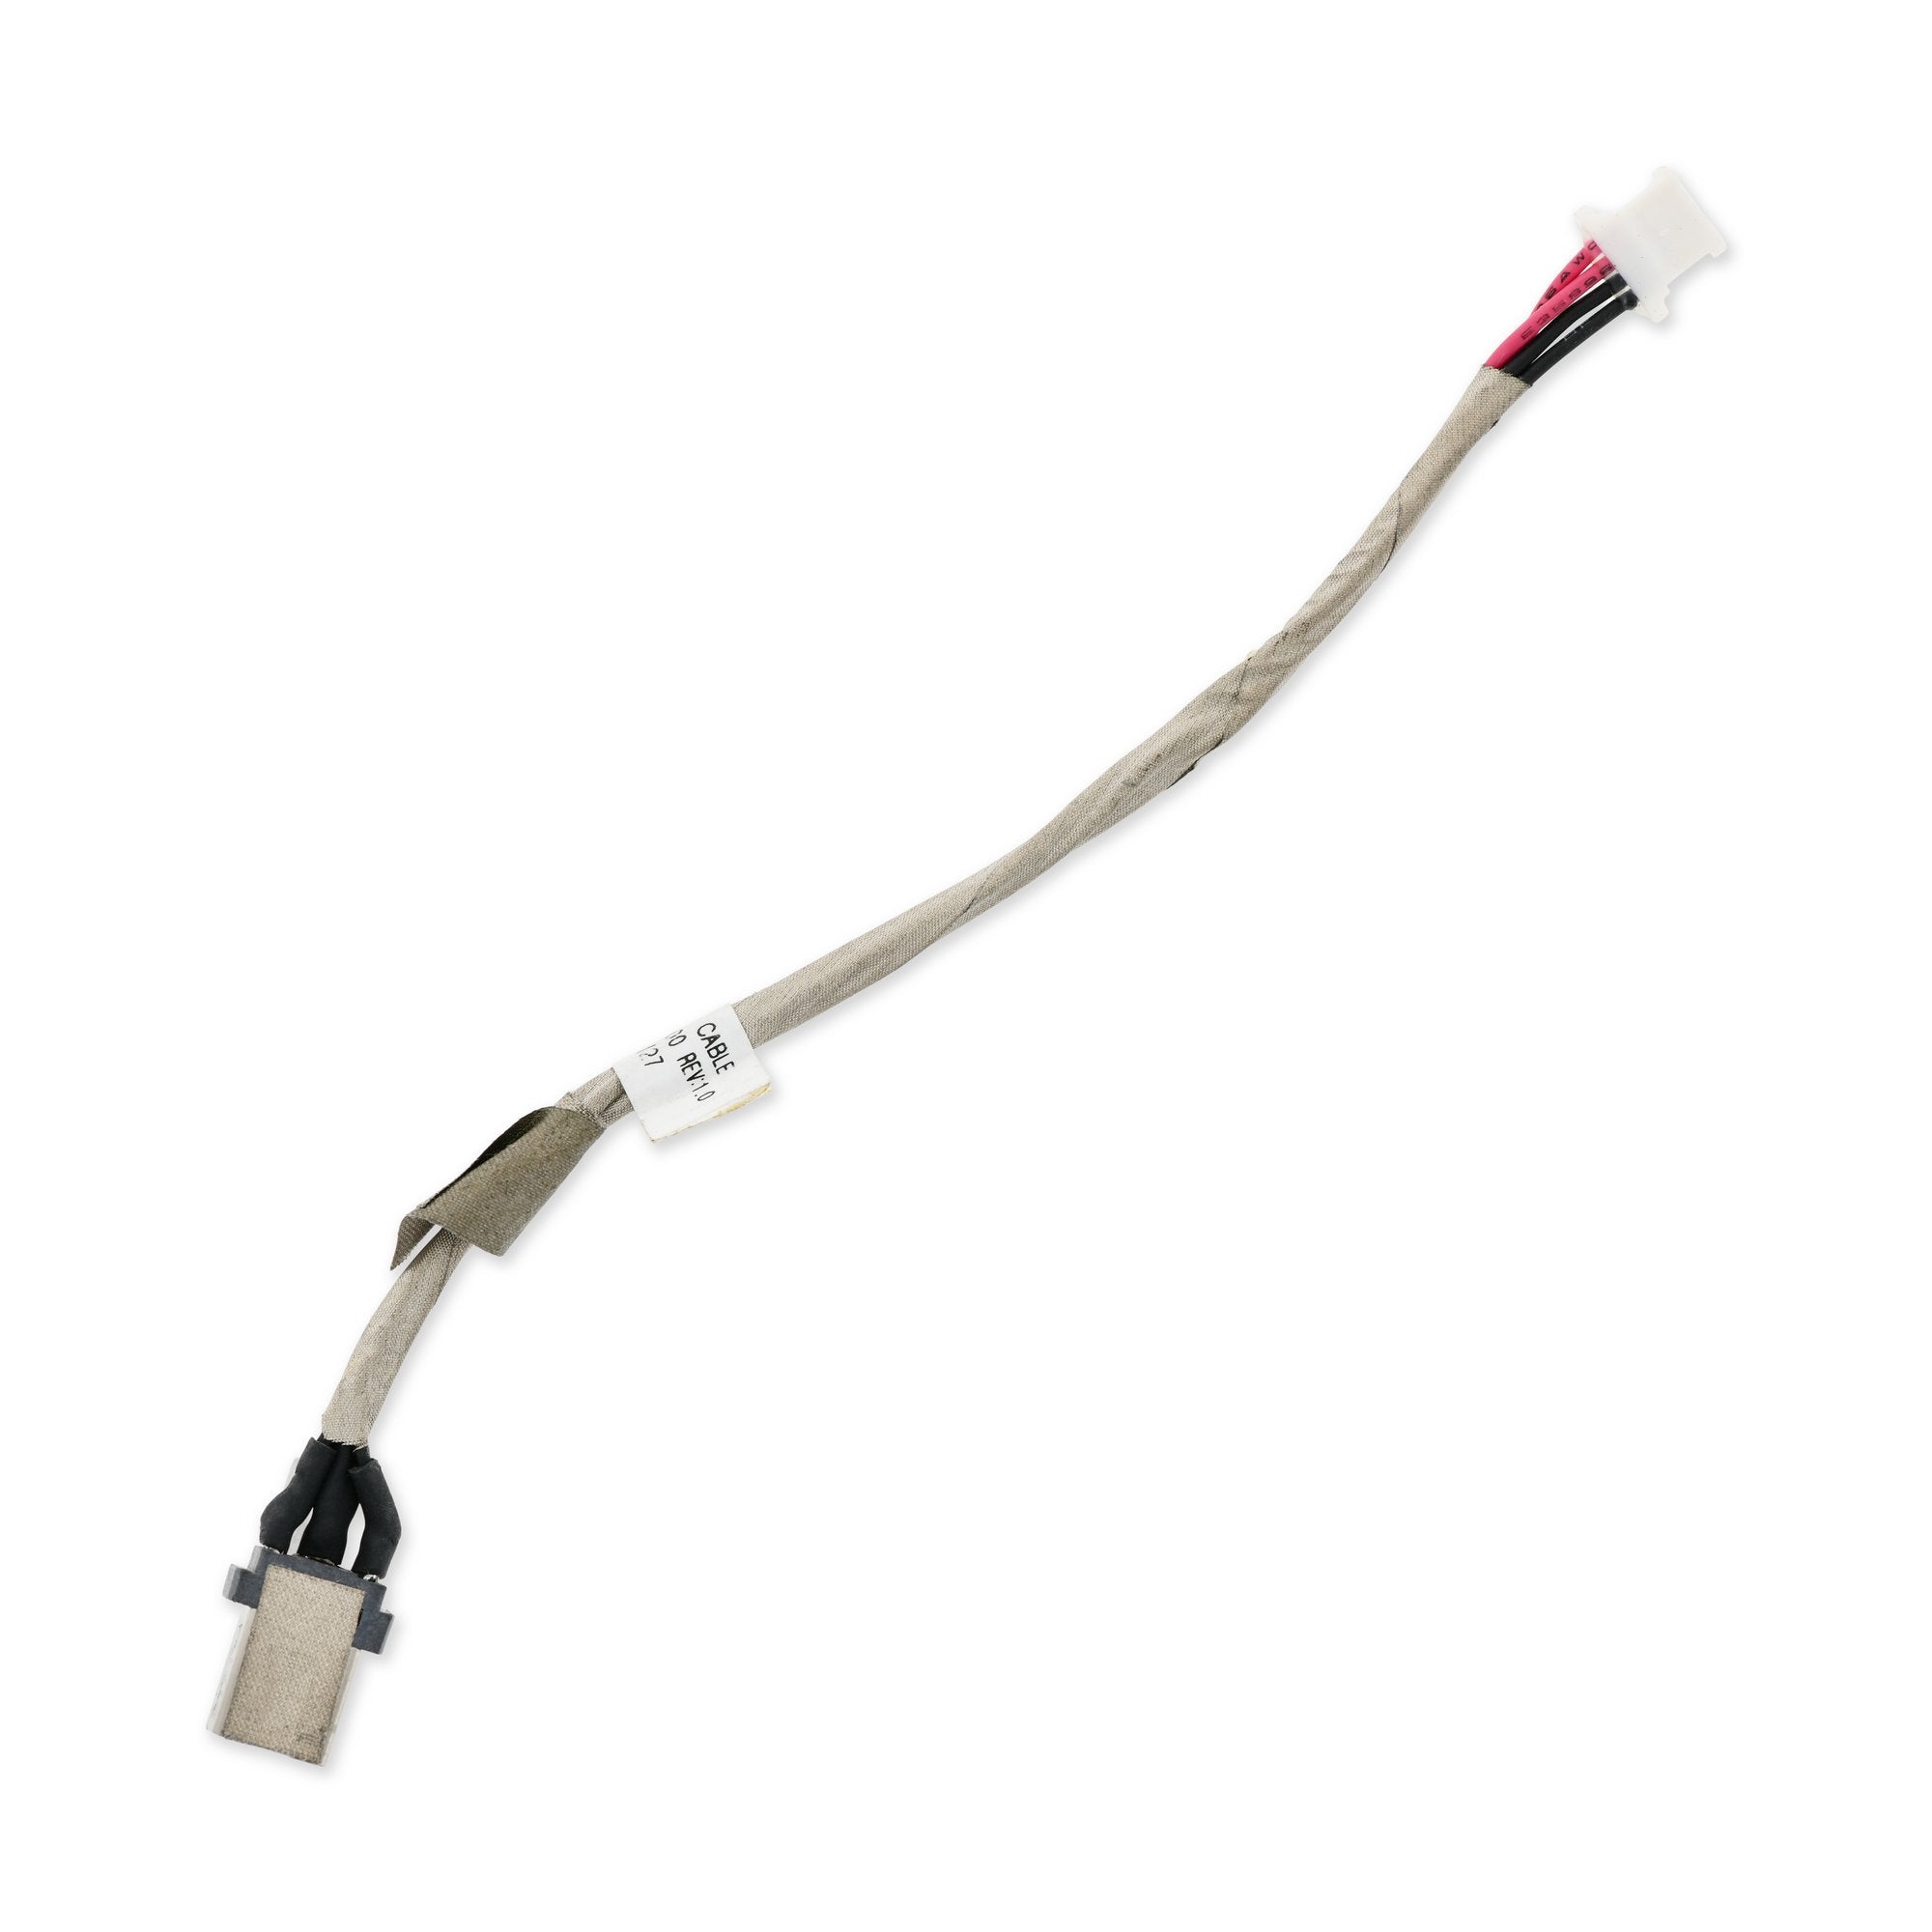 Lenovo IdeaPad Yoga 710-14 DC-IN Cable OEM